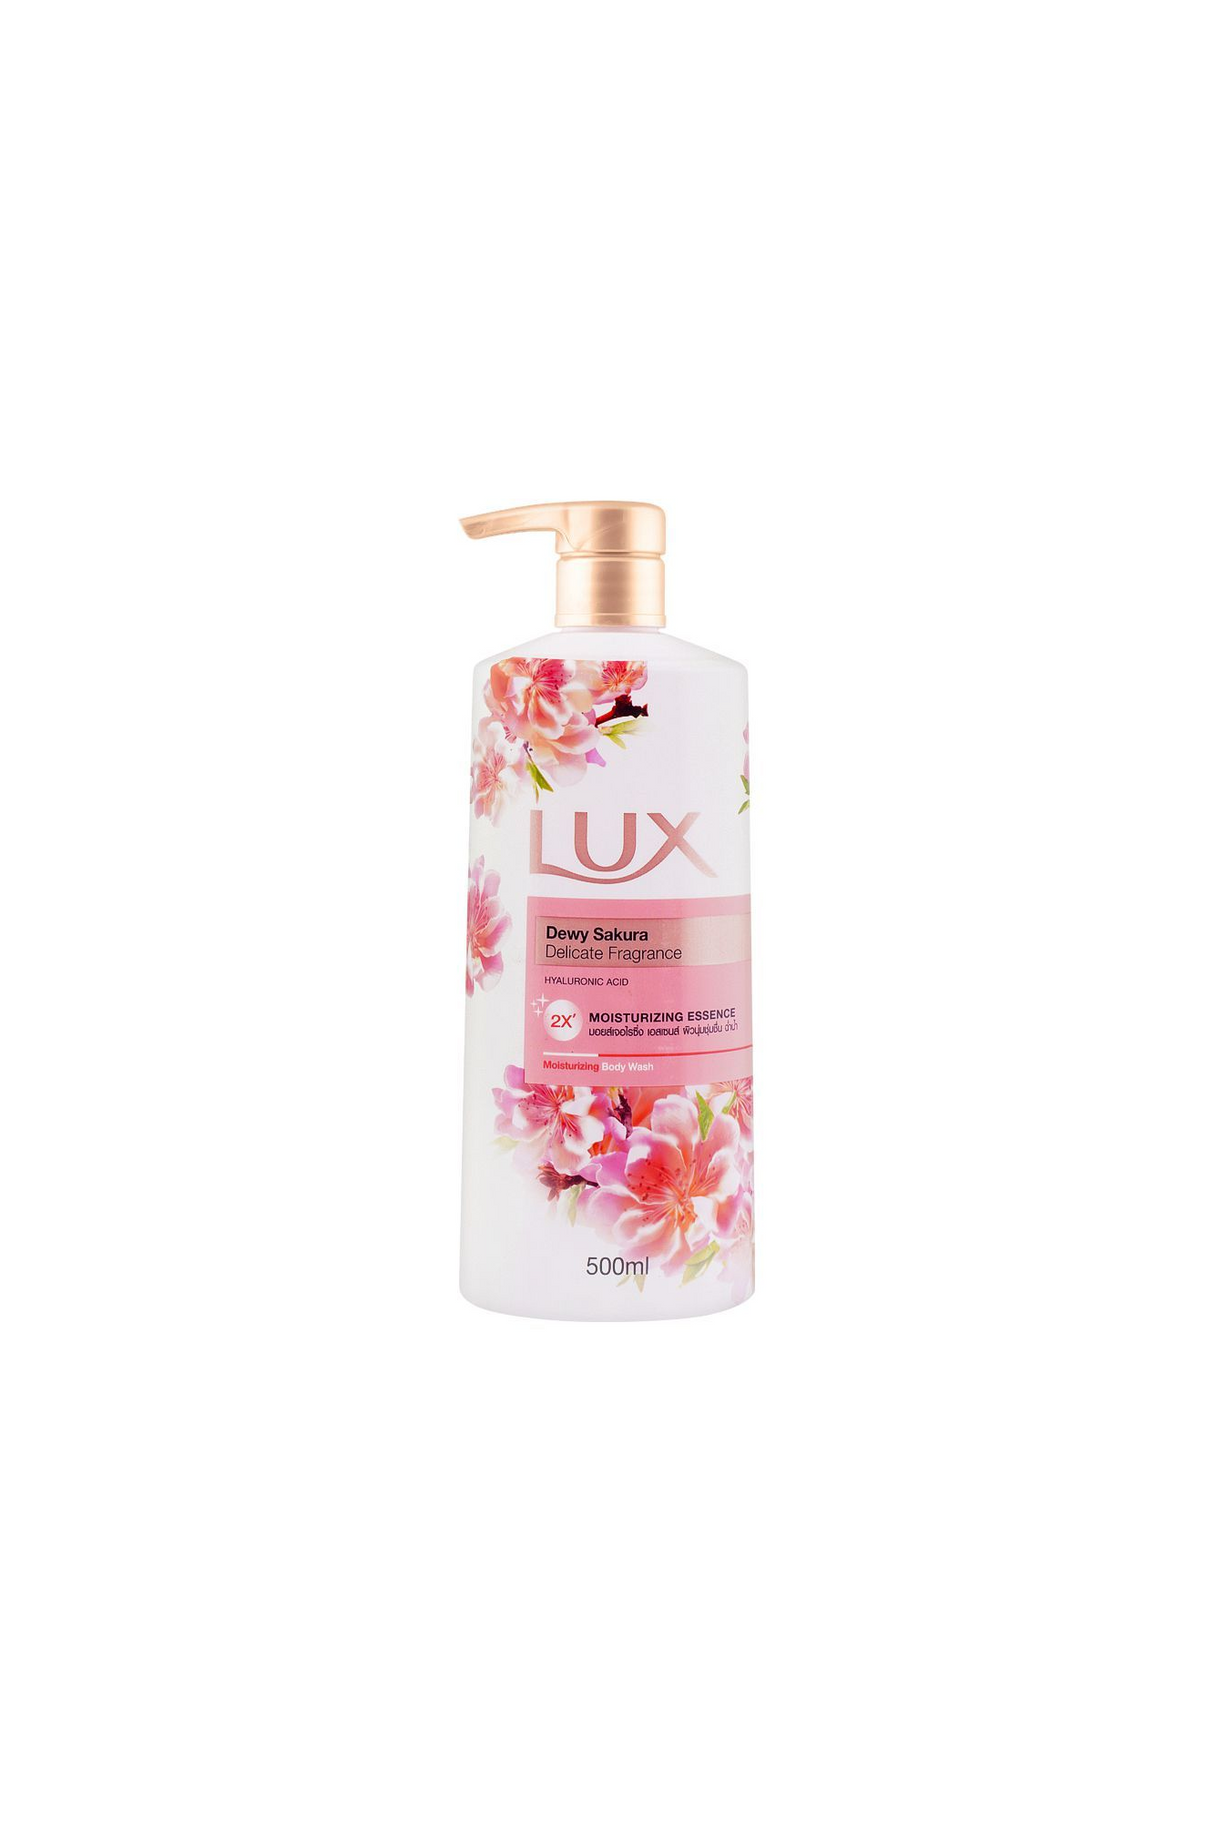 lux body wash delicate fragrance 500ml